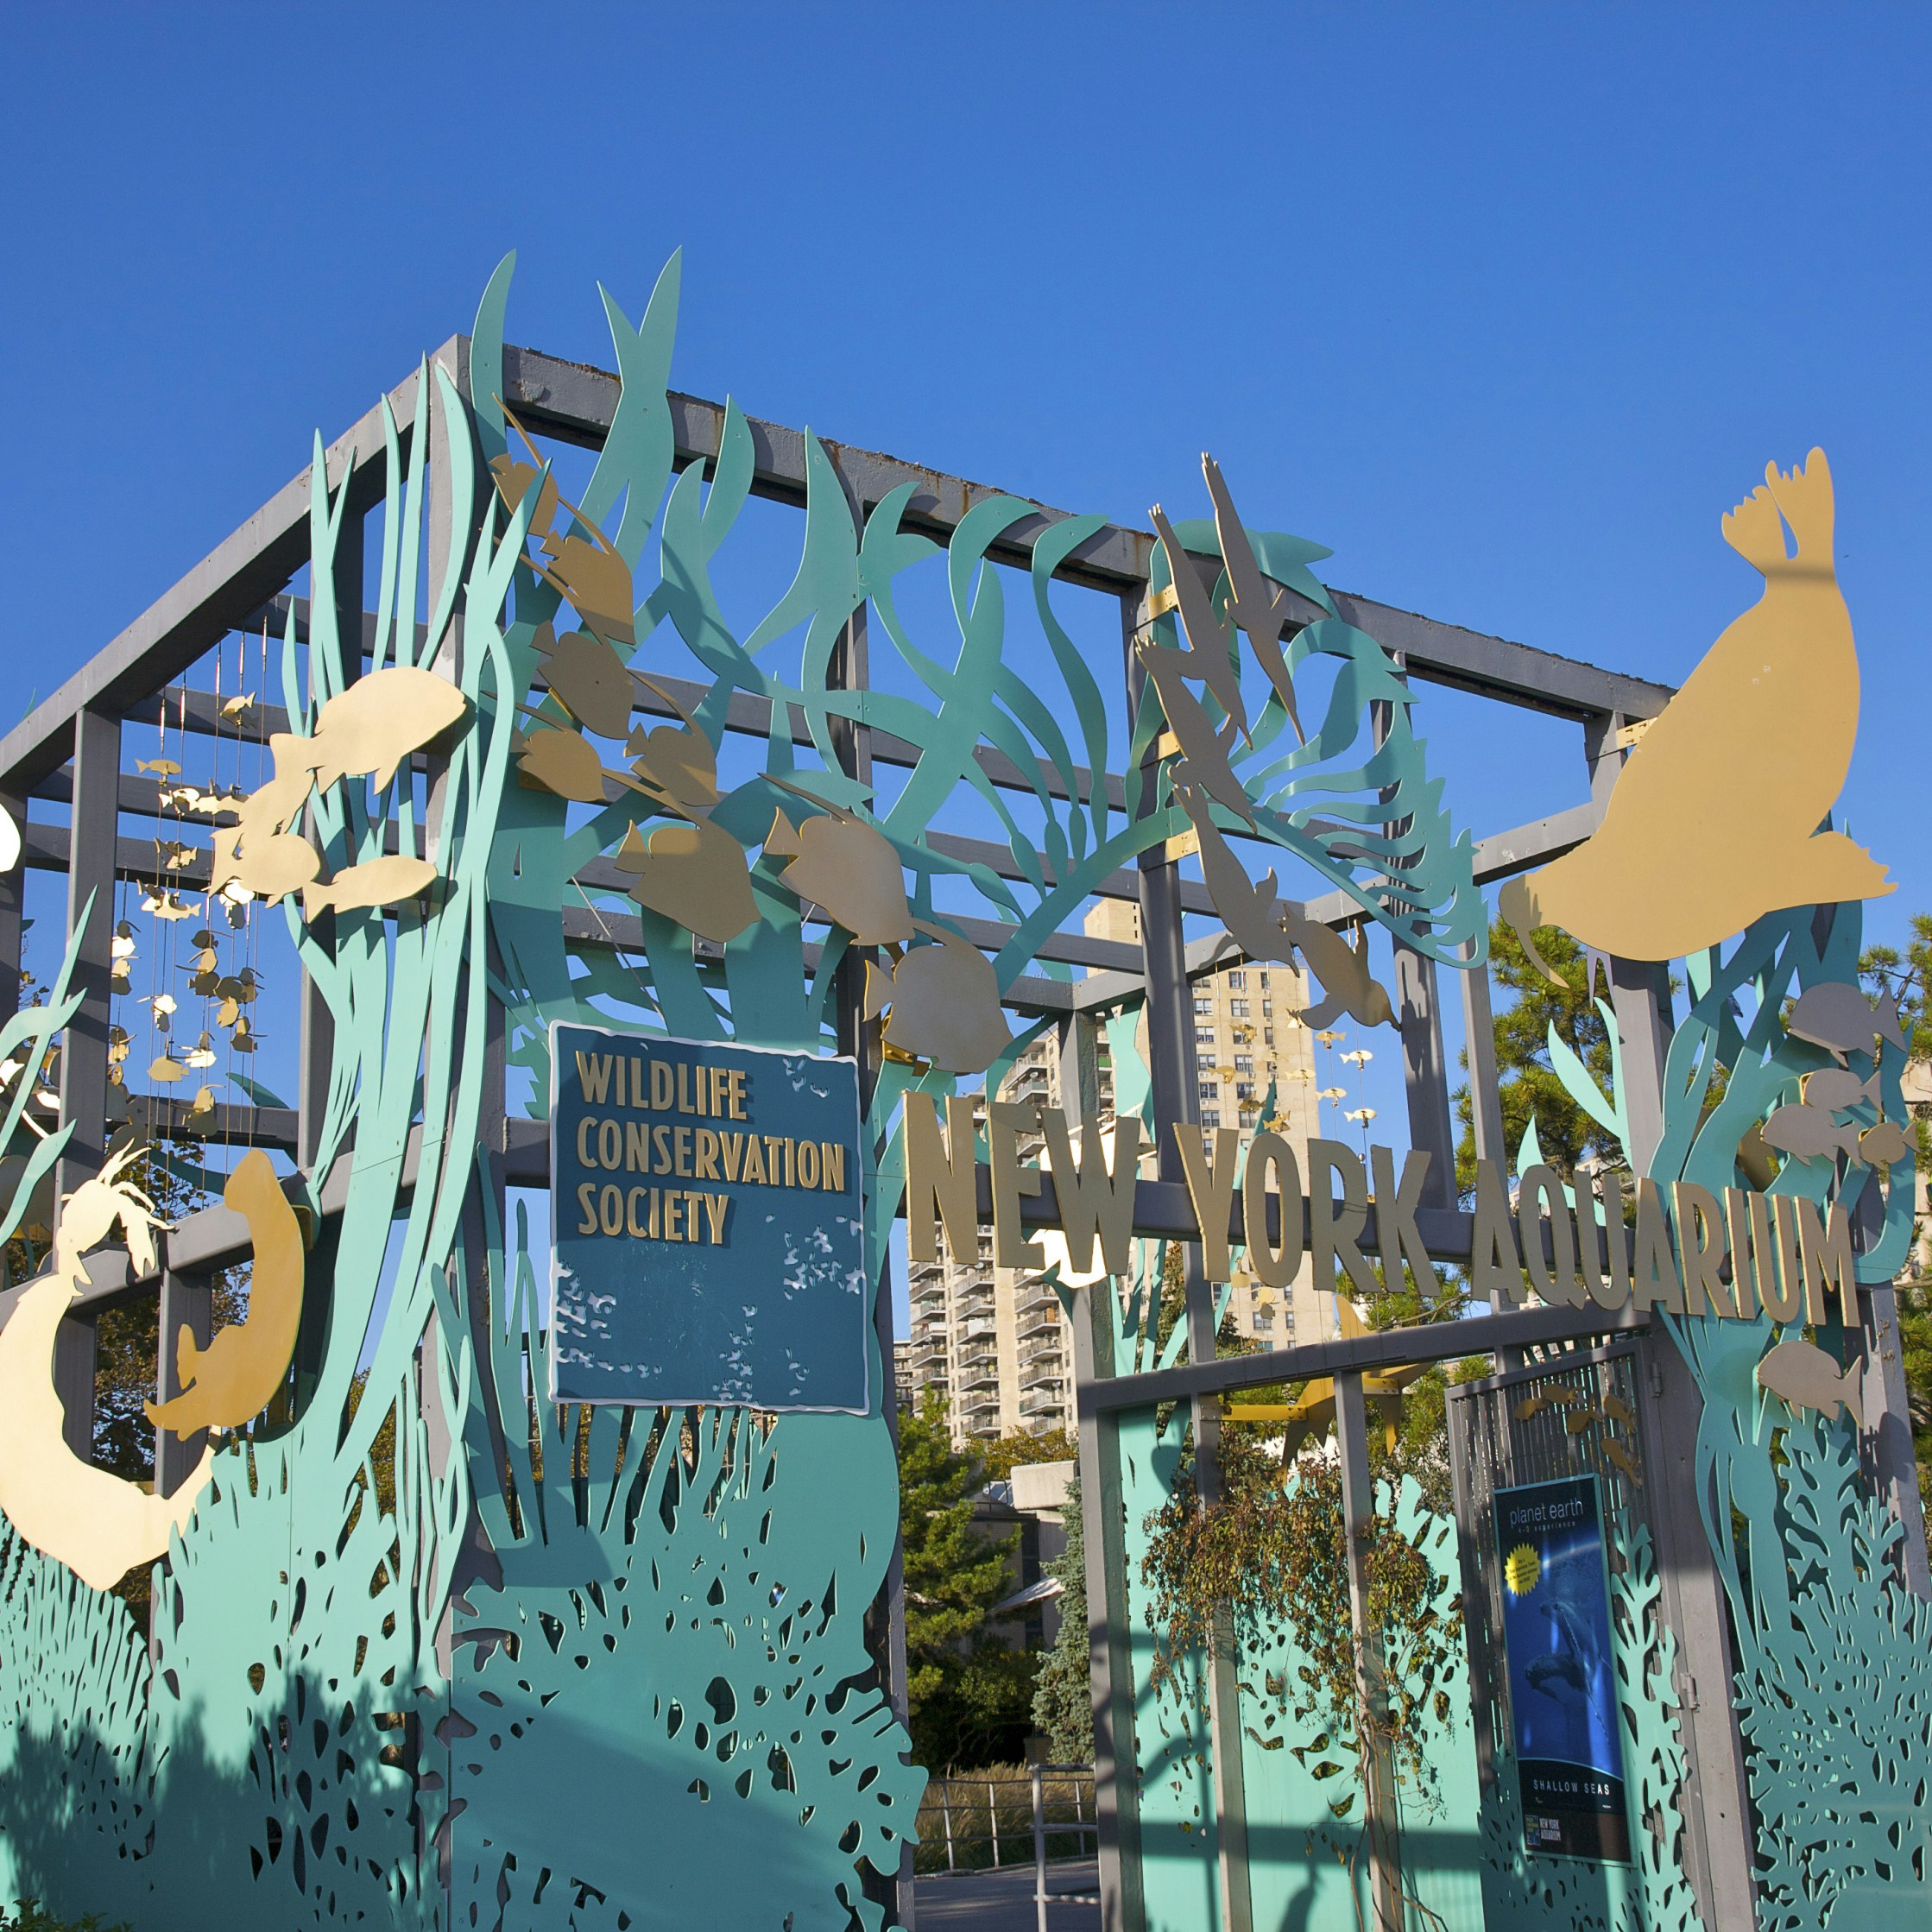 Entrance to New York Aquarium, Wildlife Conservation Society, Coney Island, Brooklyn, New York, U.S.A.